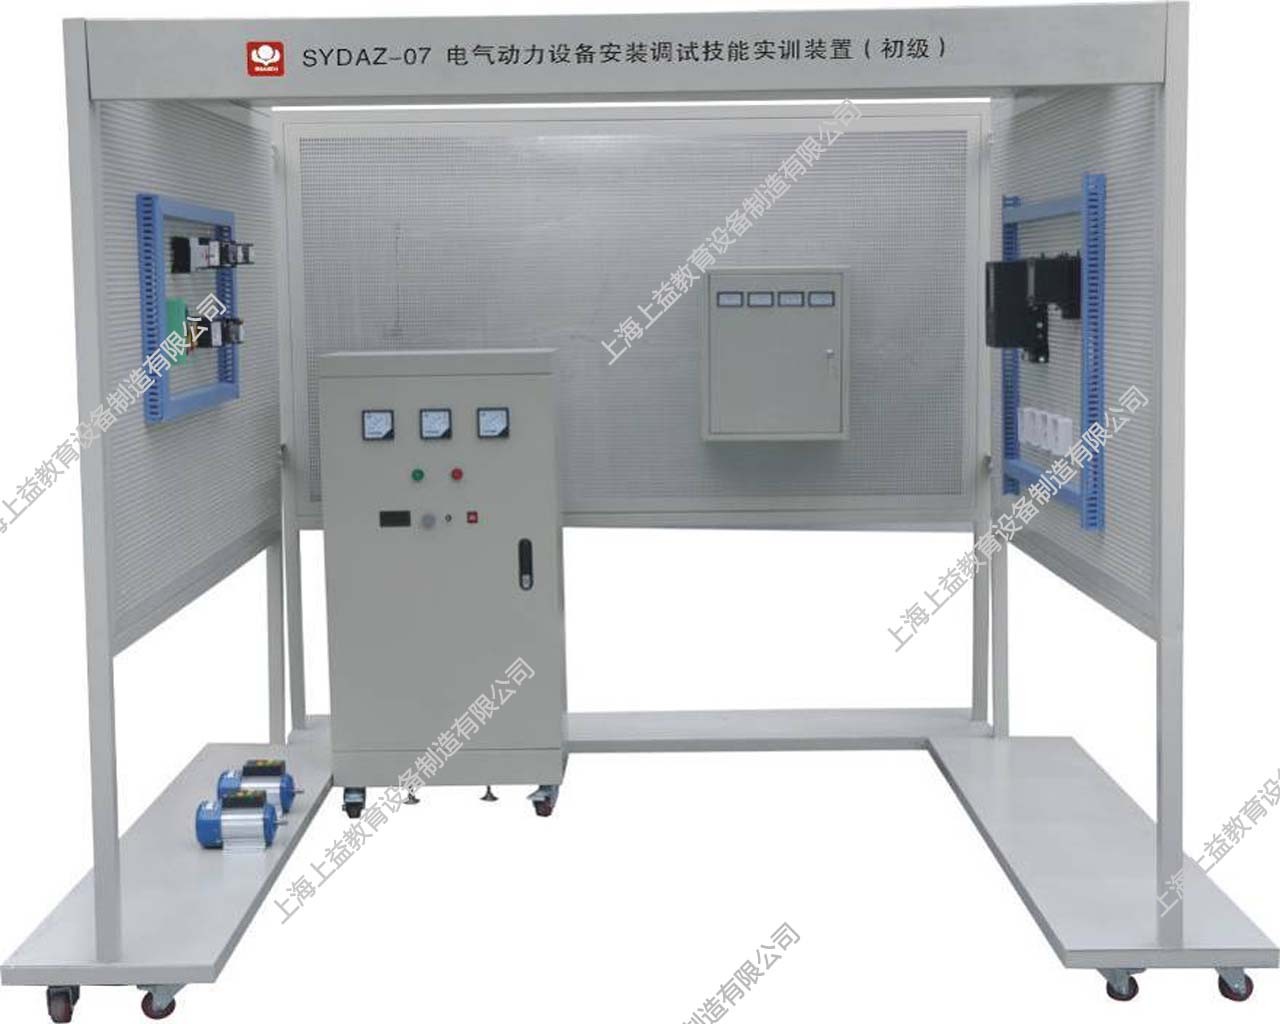 SYDAZ-07电气动力设备安装调试技能实训装置(初级)